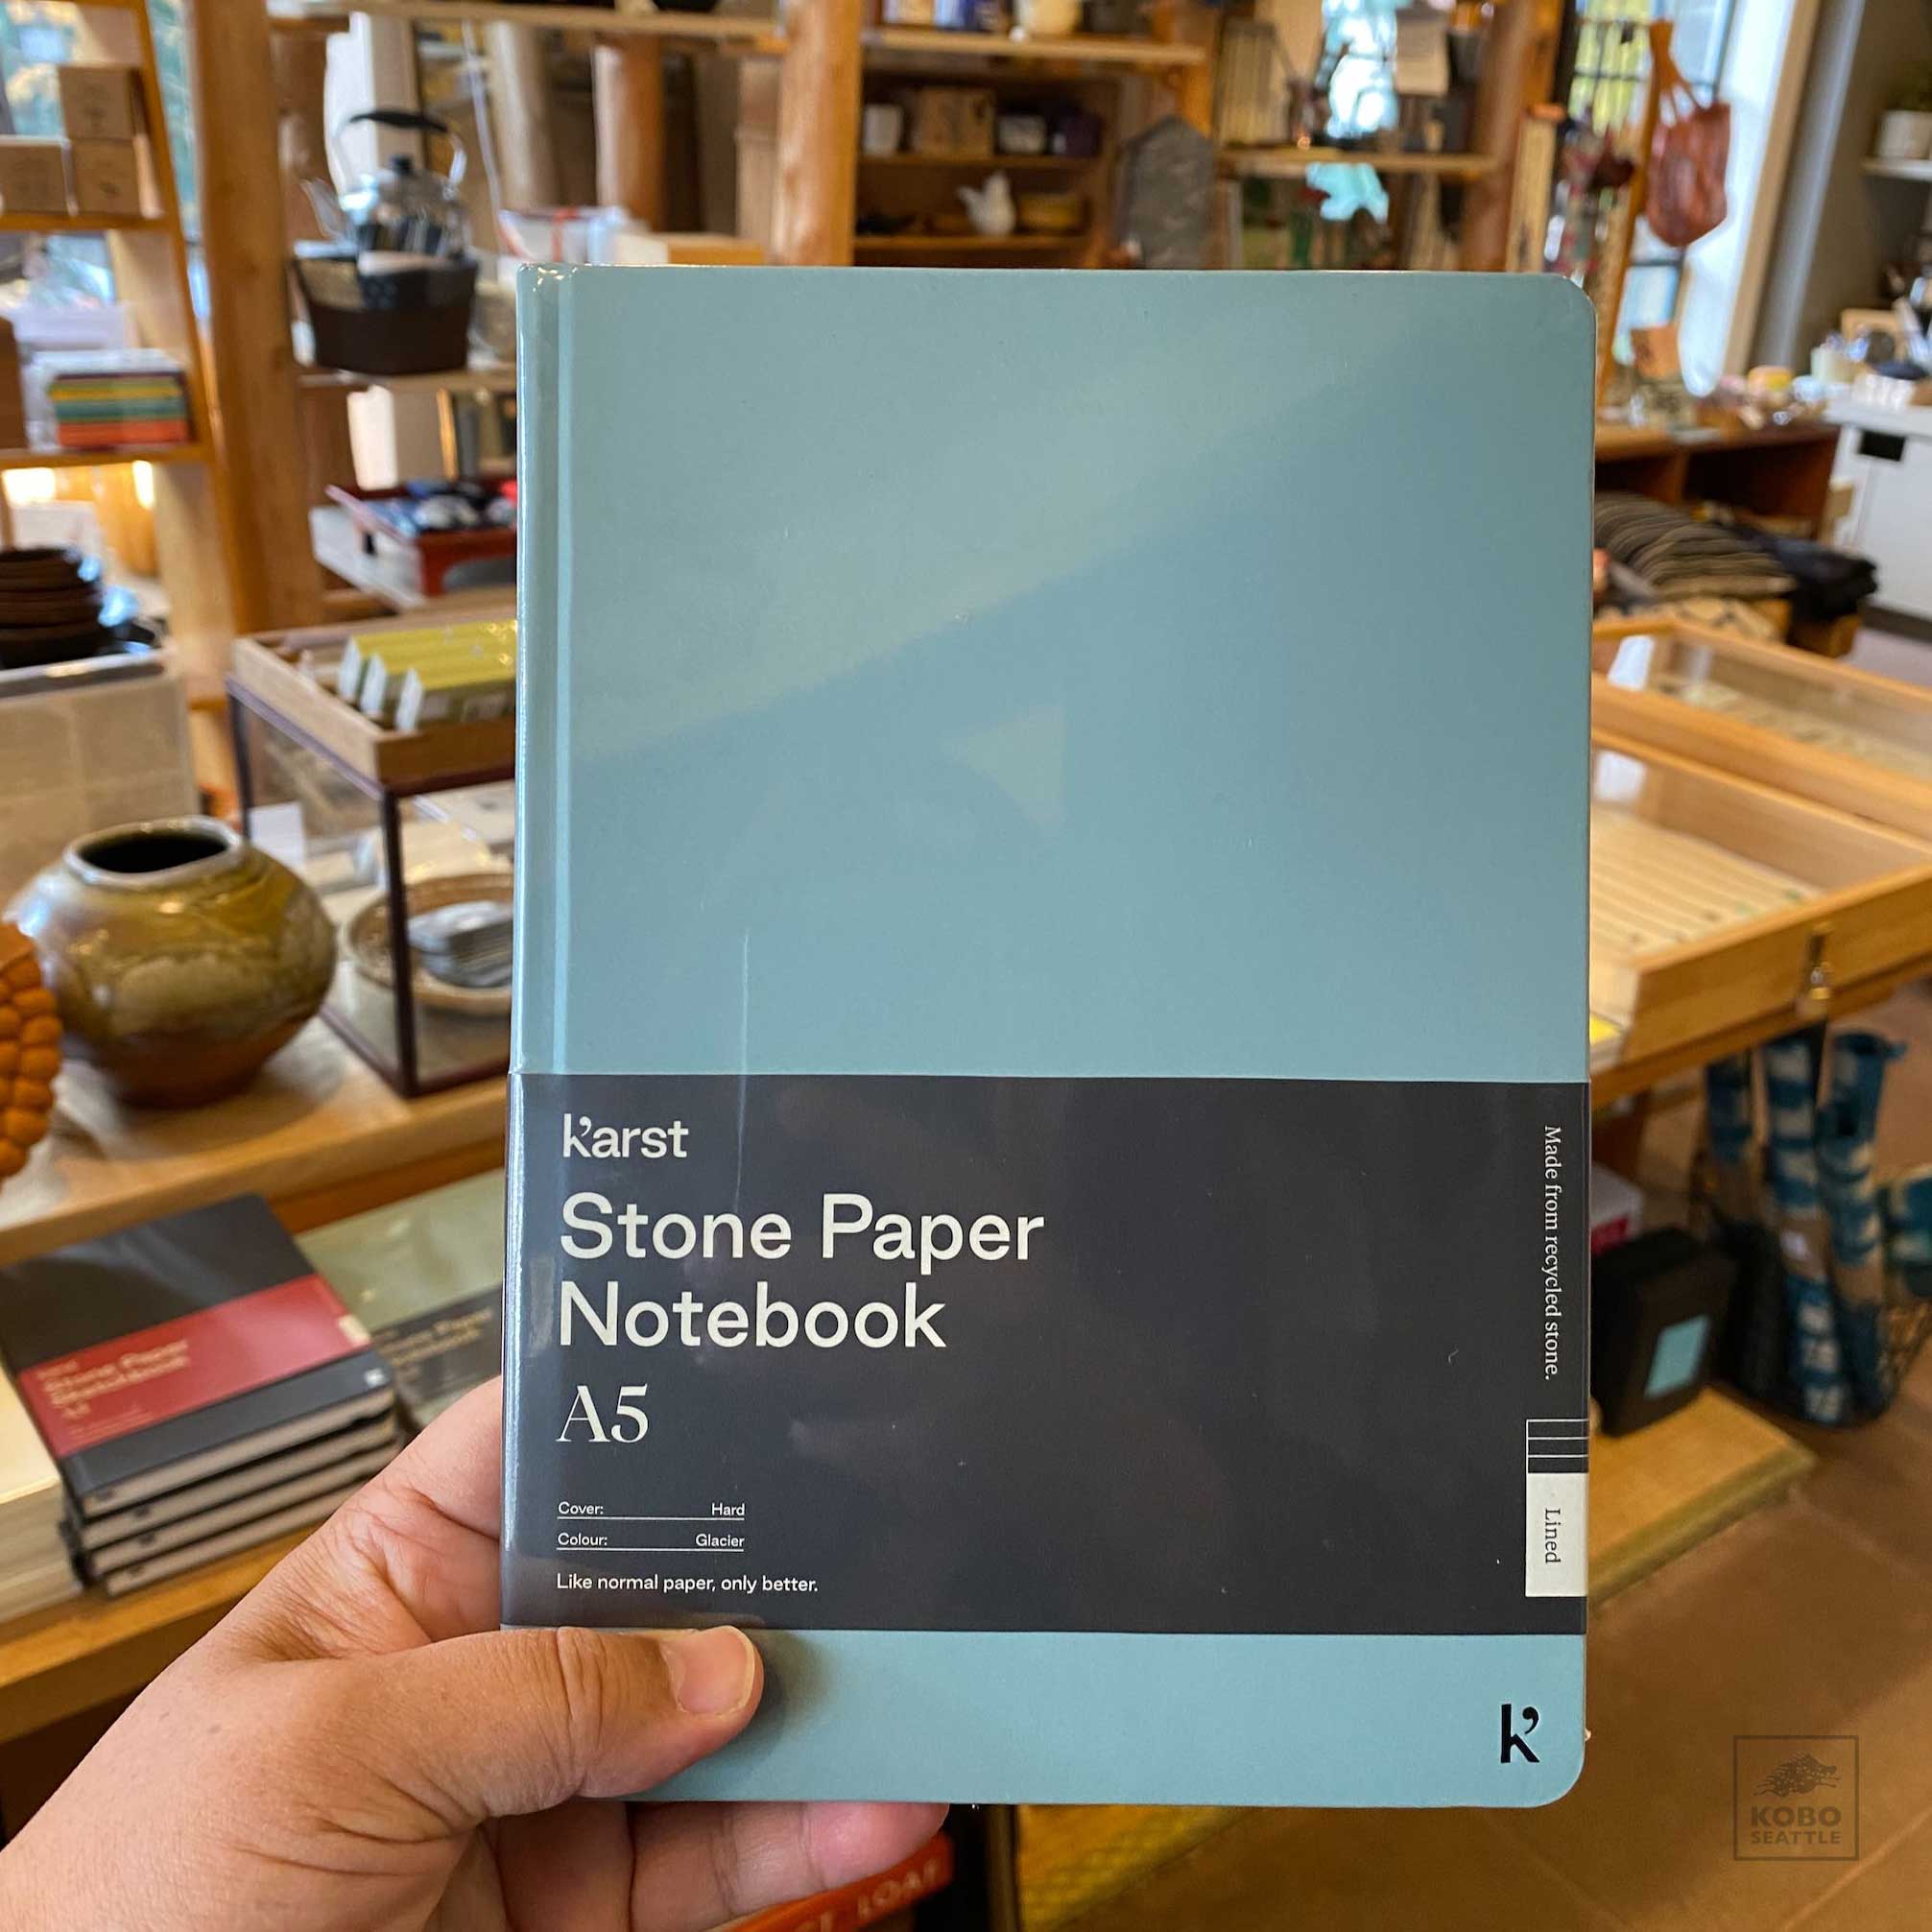 Stone Paper Notebook A5 - KoboSeattle